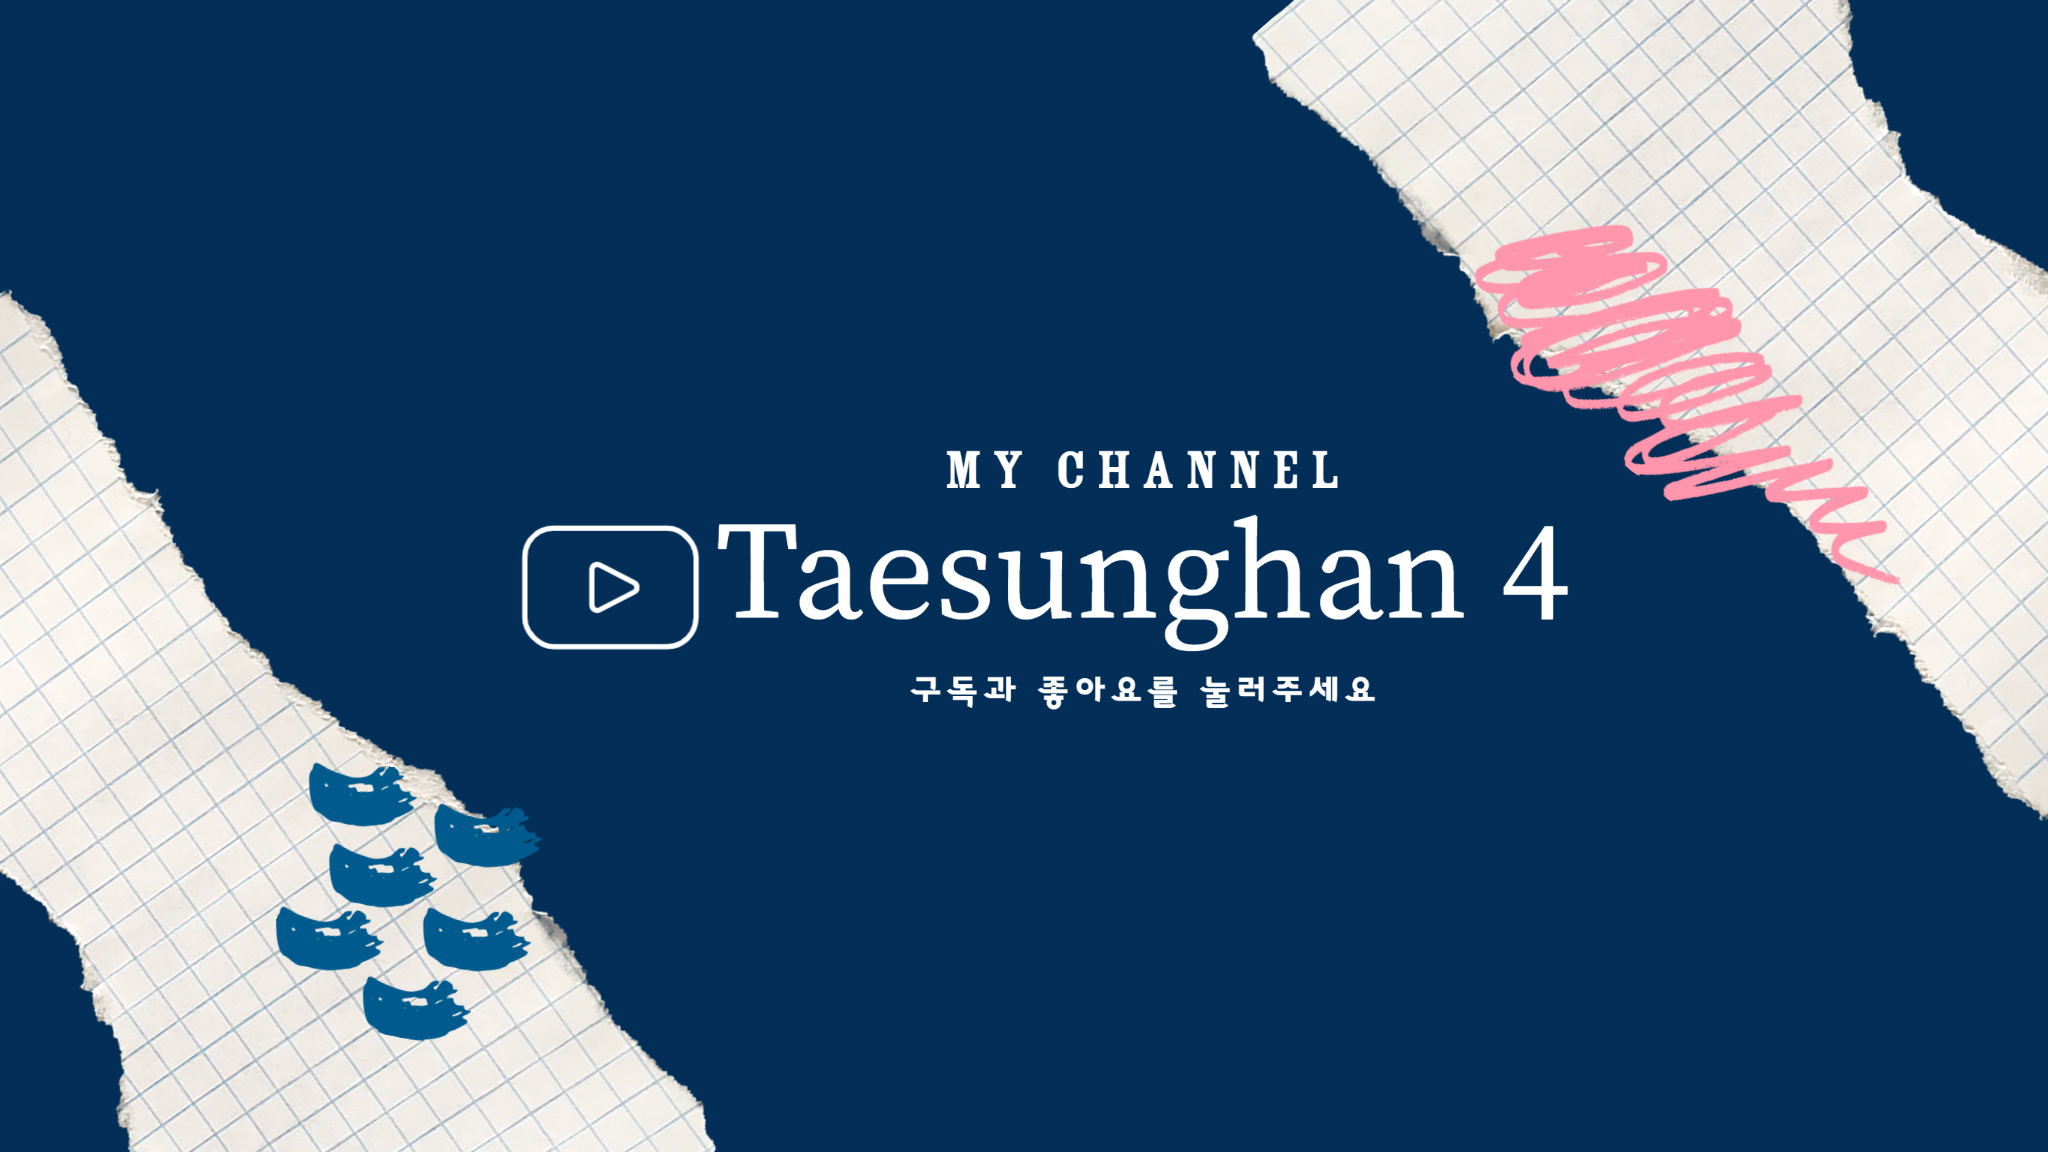 Taesunghan 4 채널아트-1.jpg